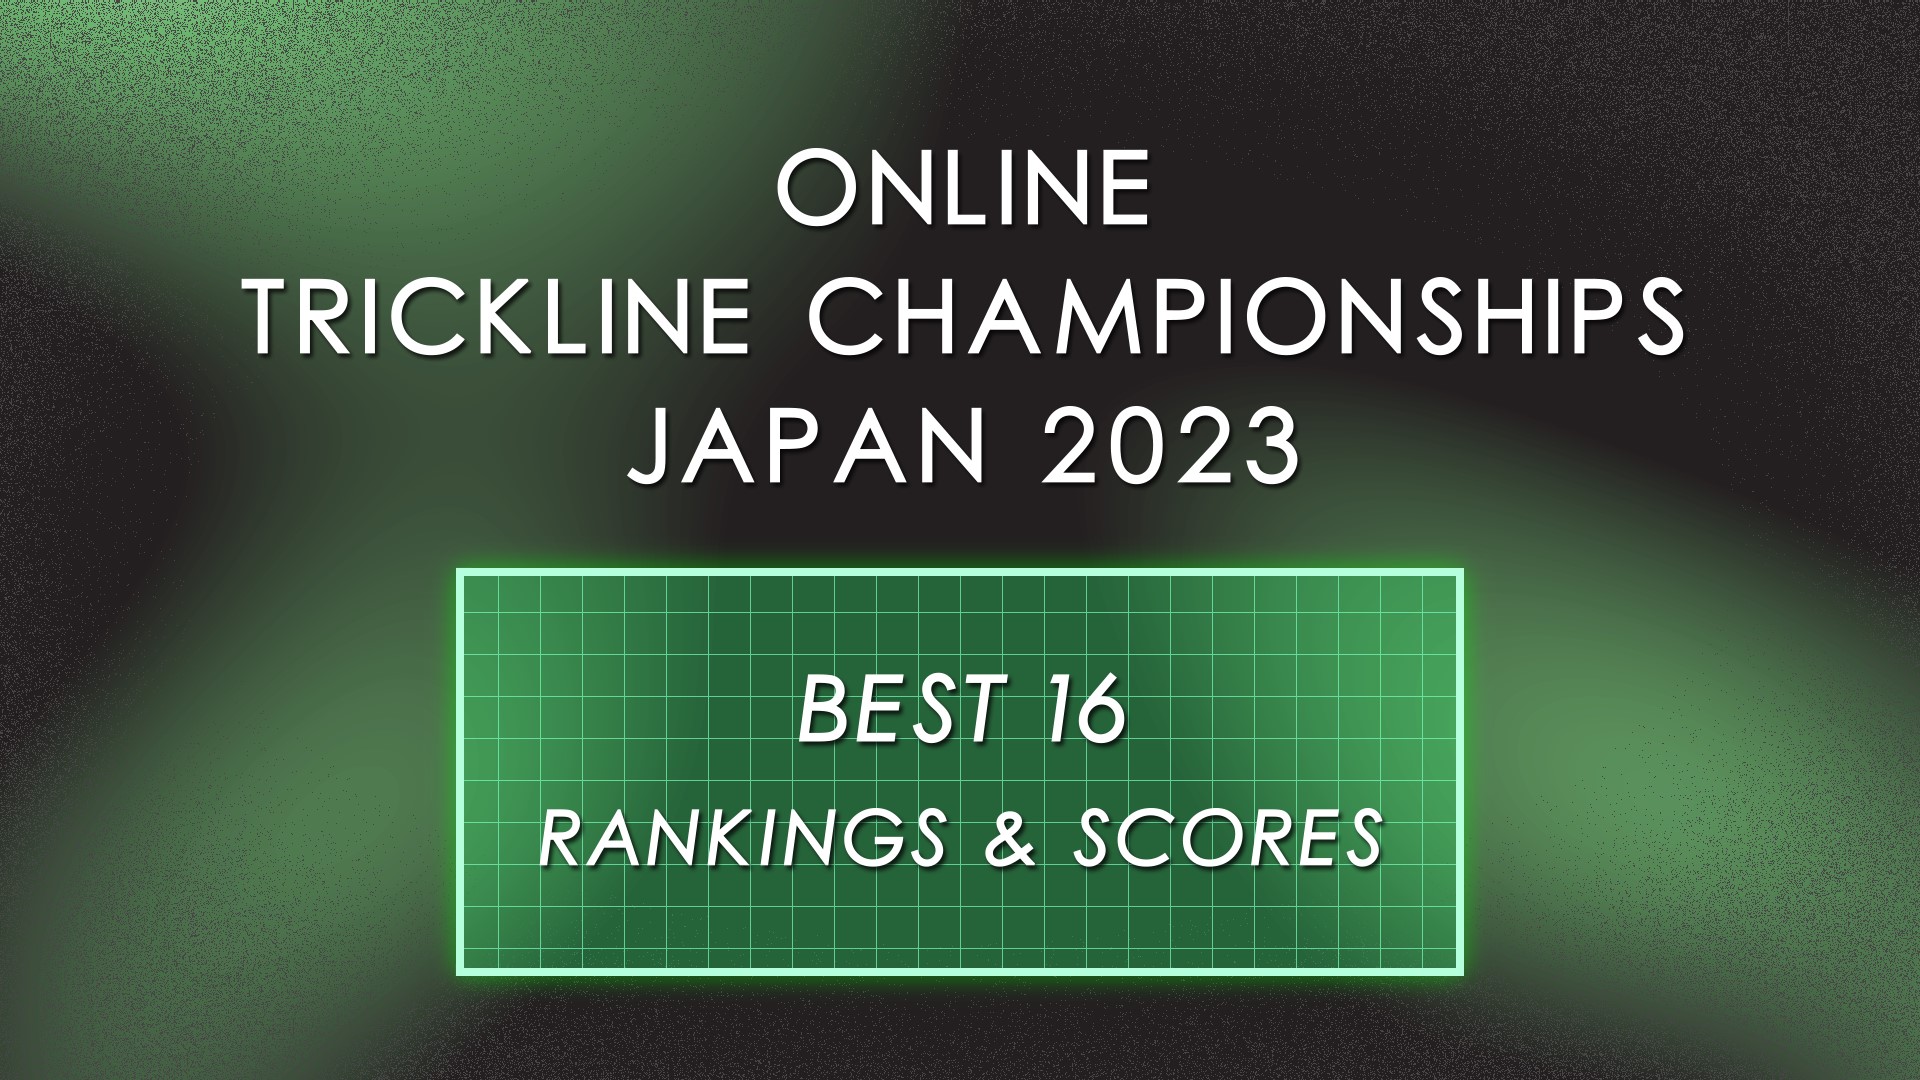 ONLINE TRICKLINE CHAMPIONSHIPS JAPAN 2023